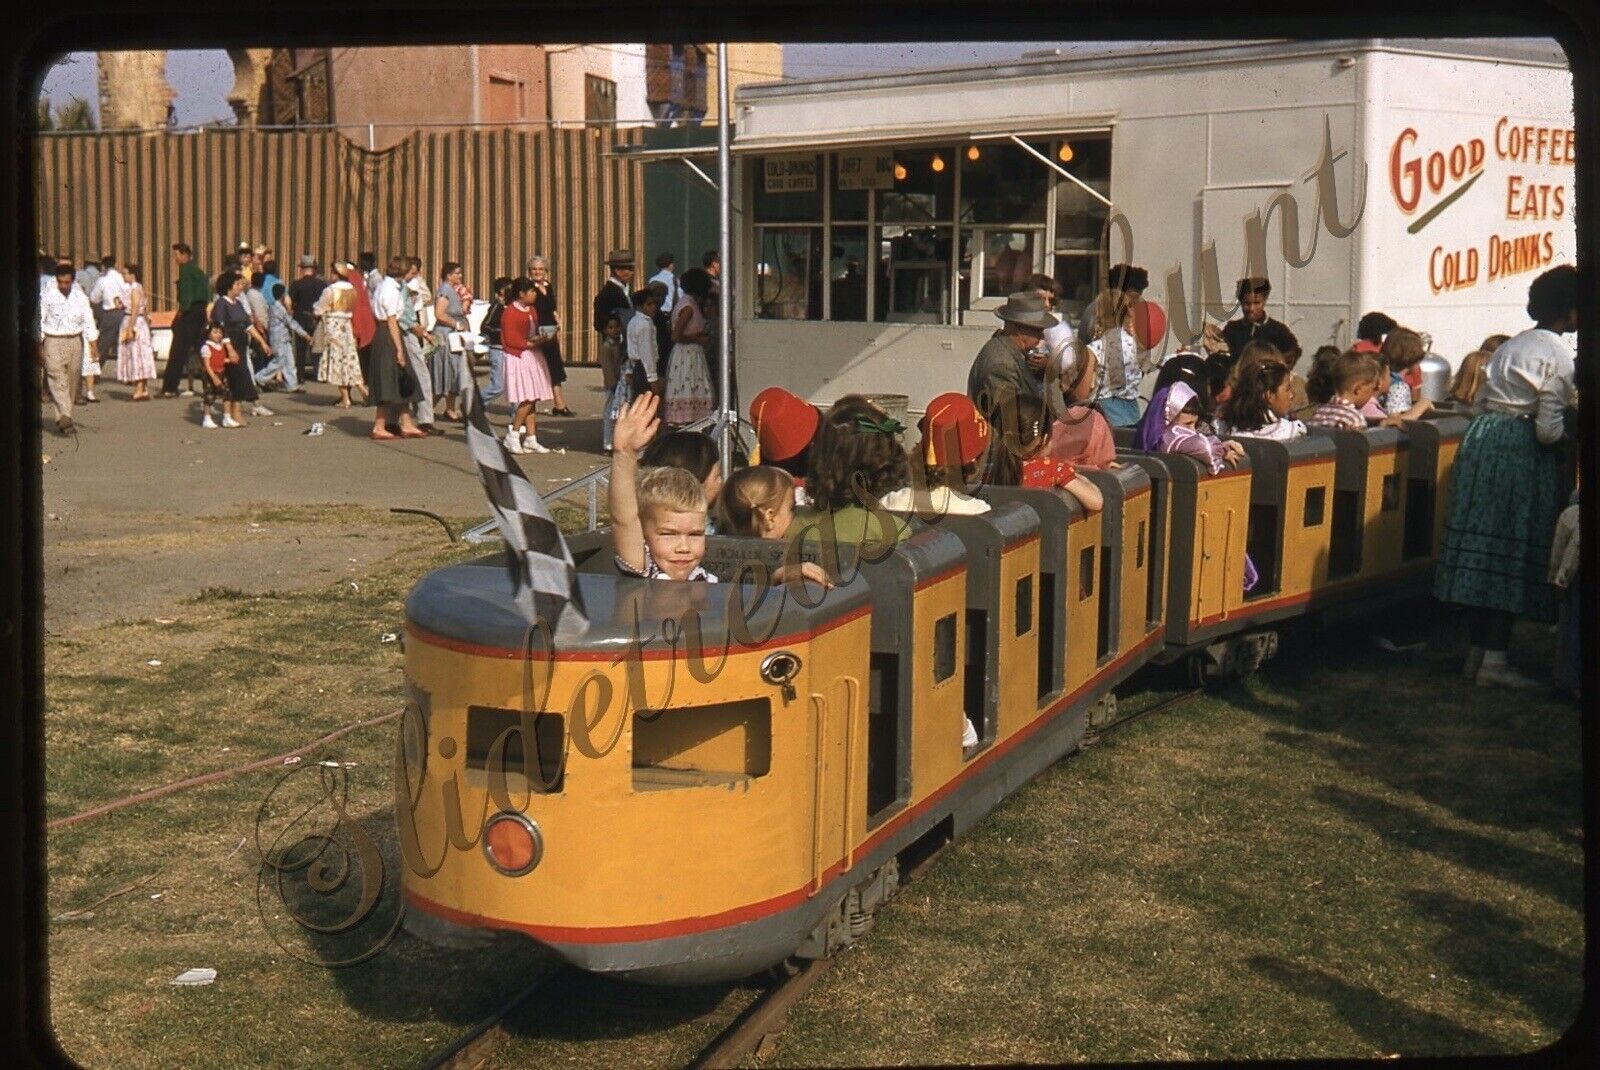 Miniature Train Ride Carnival Food Stand 35mm Slide 1950s Red Border Kodachrome